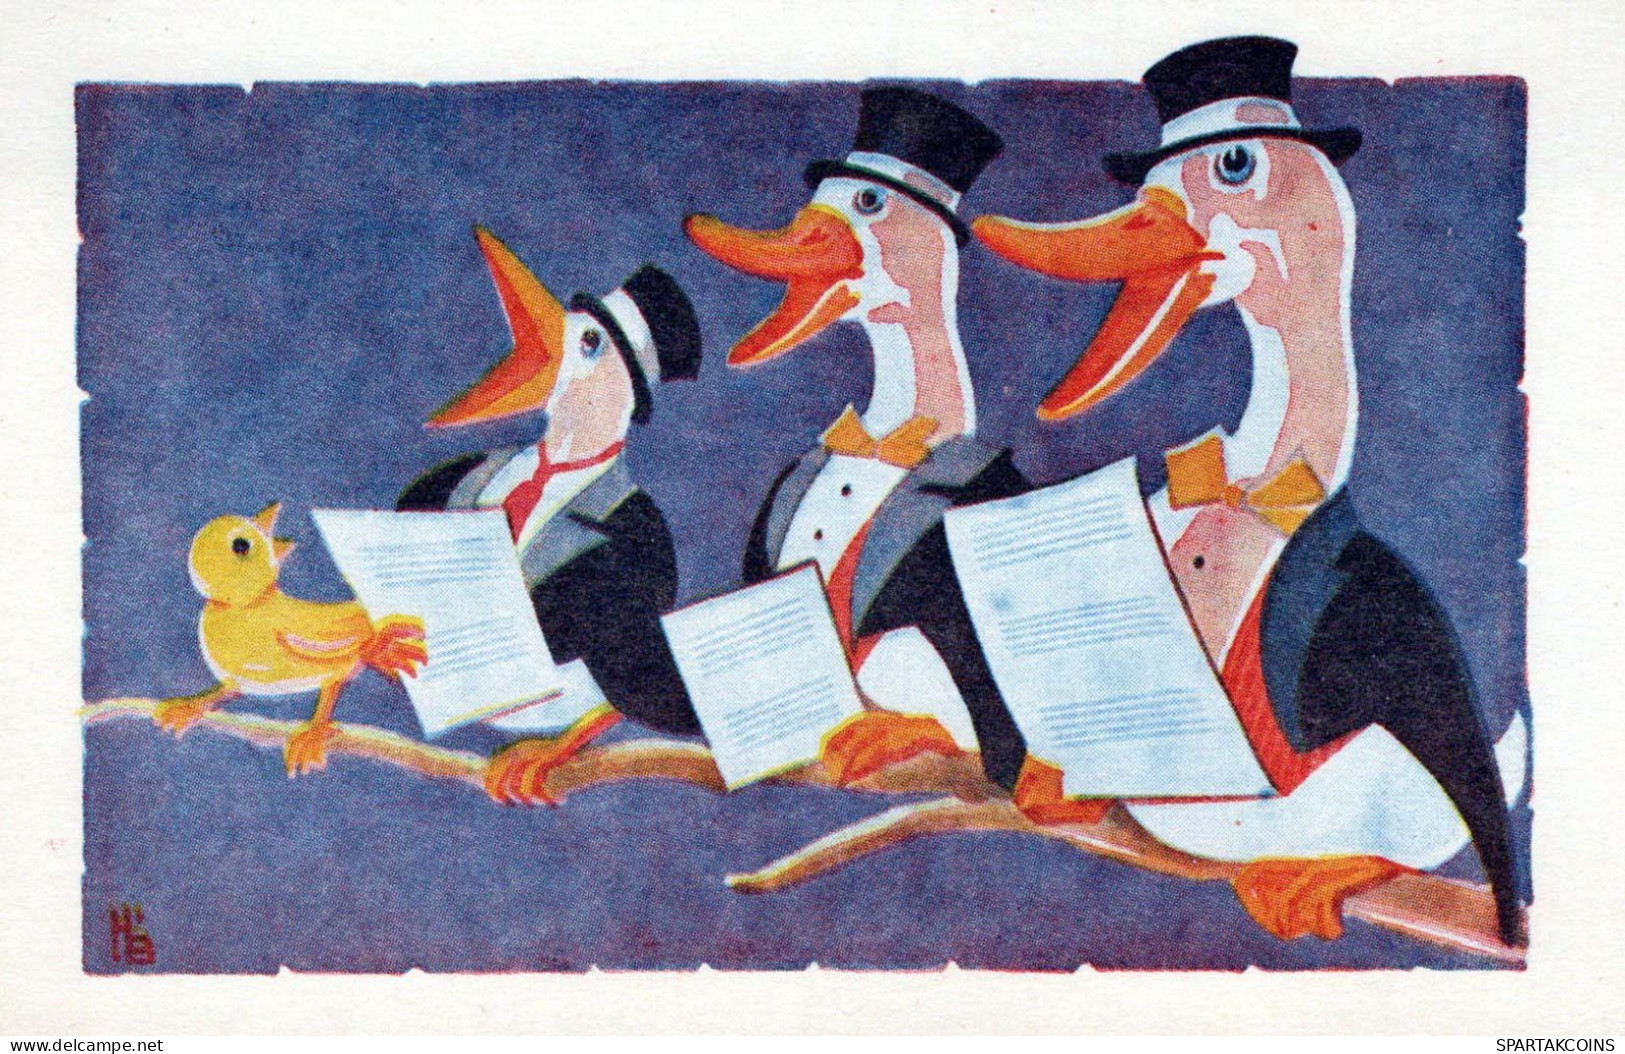 UCCELLO Animale Vintage Cartolina CPA #PKE803.A - Vögel